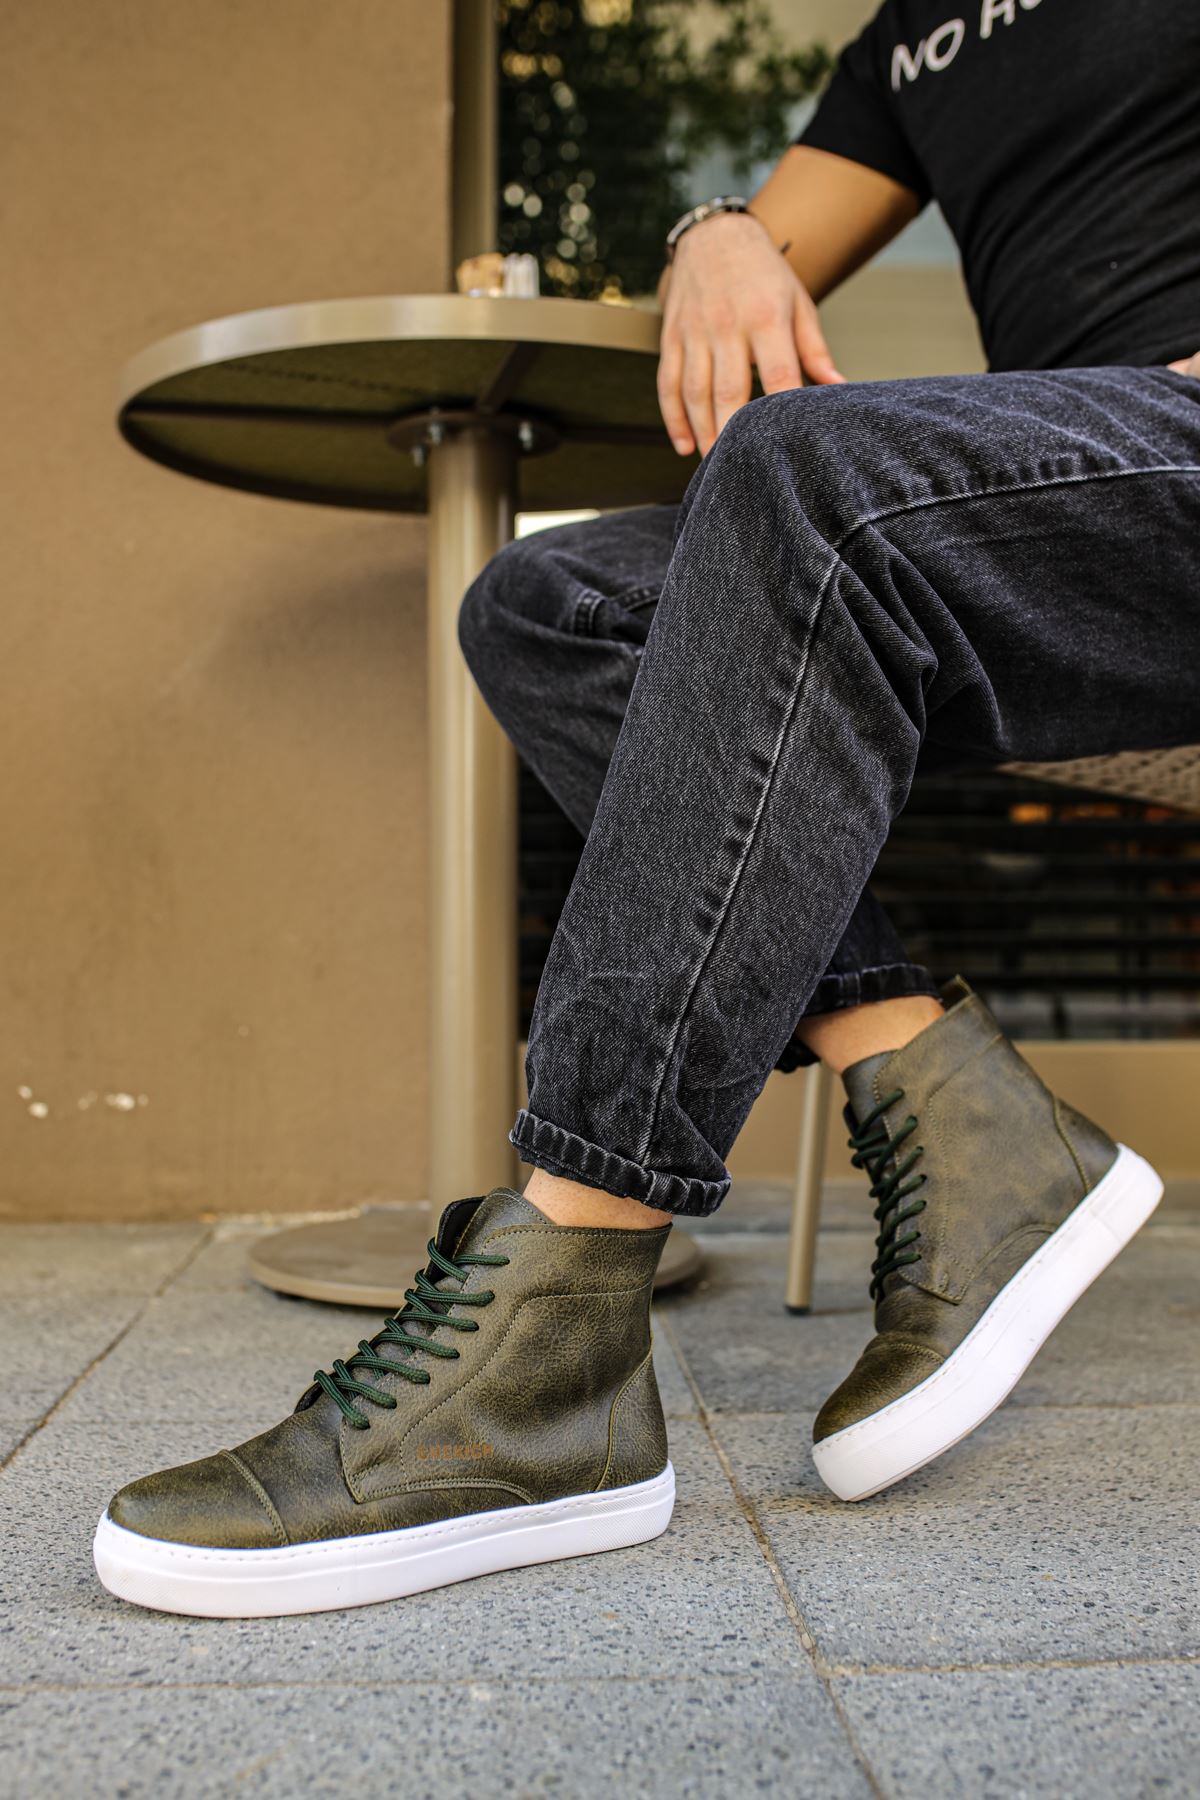 CH029 Men's Khaki Casual Sneaker Boots - STREET MODE ™